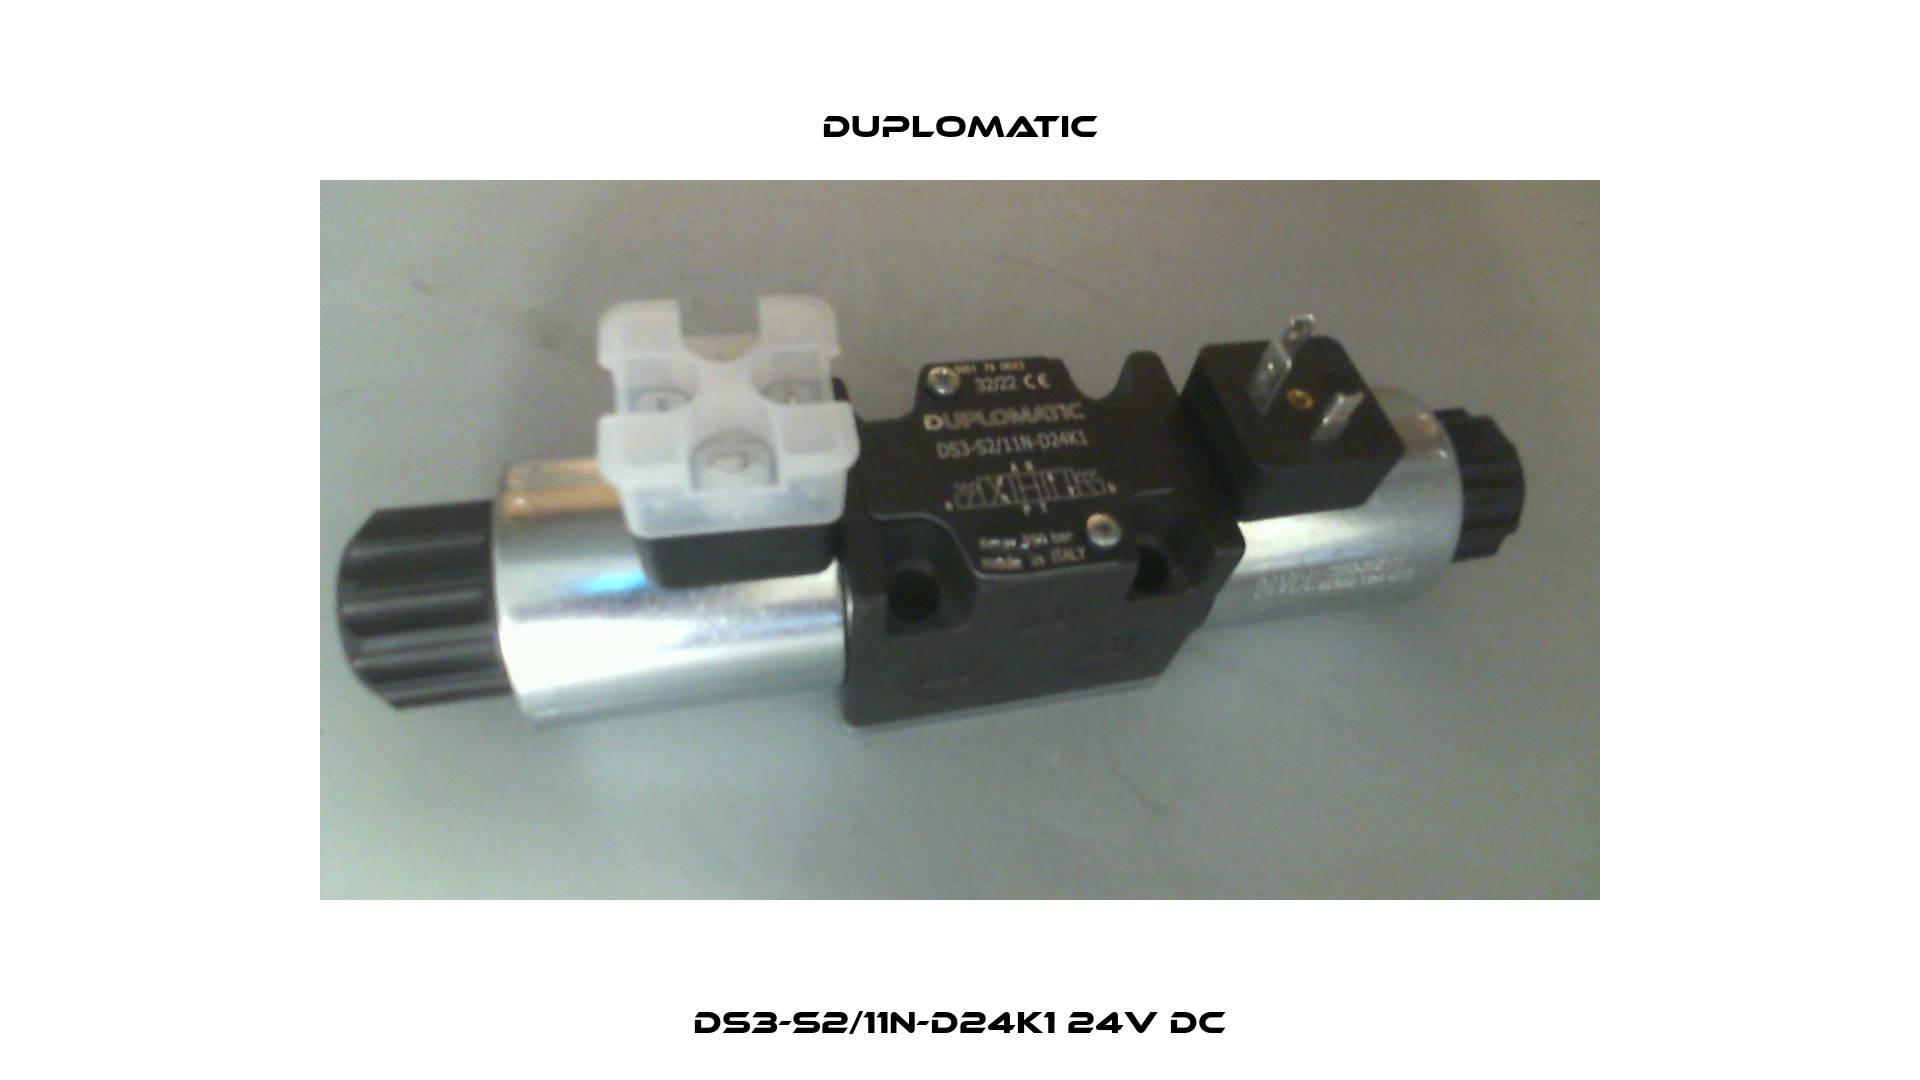 DS3-S2/11N-D24K1 24V DC Duplomatic